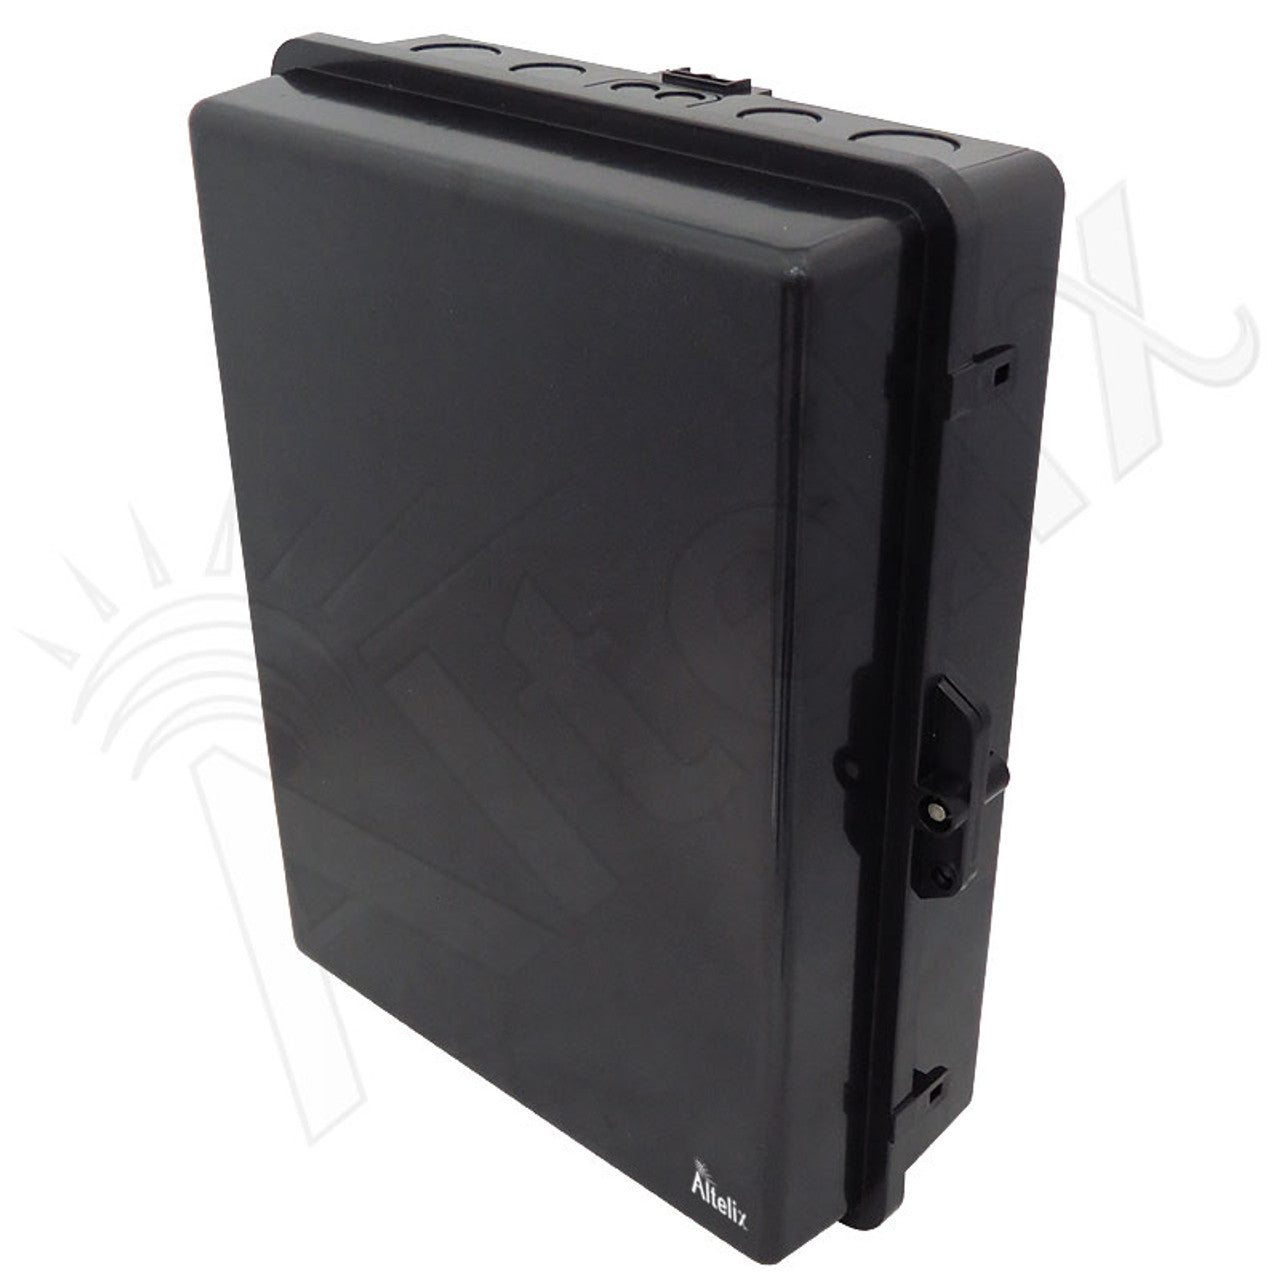 Buy black Altelix 17x14x6 PC + ABS Weatherproof NEMA Enclosure with Hinged Door &amp; Aluminum Mounting Plate